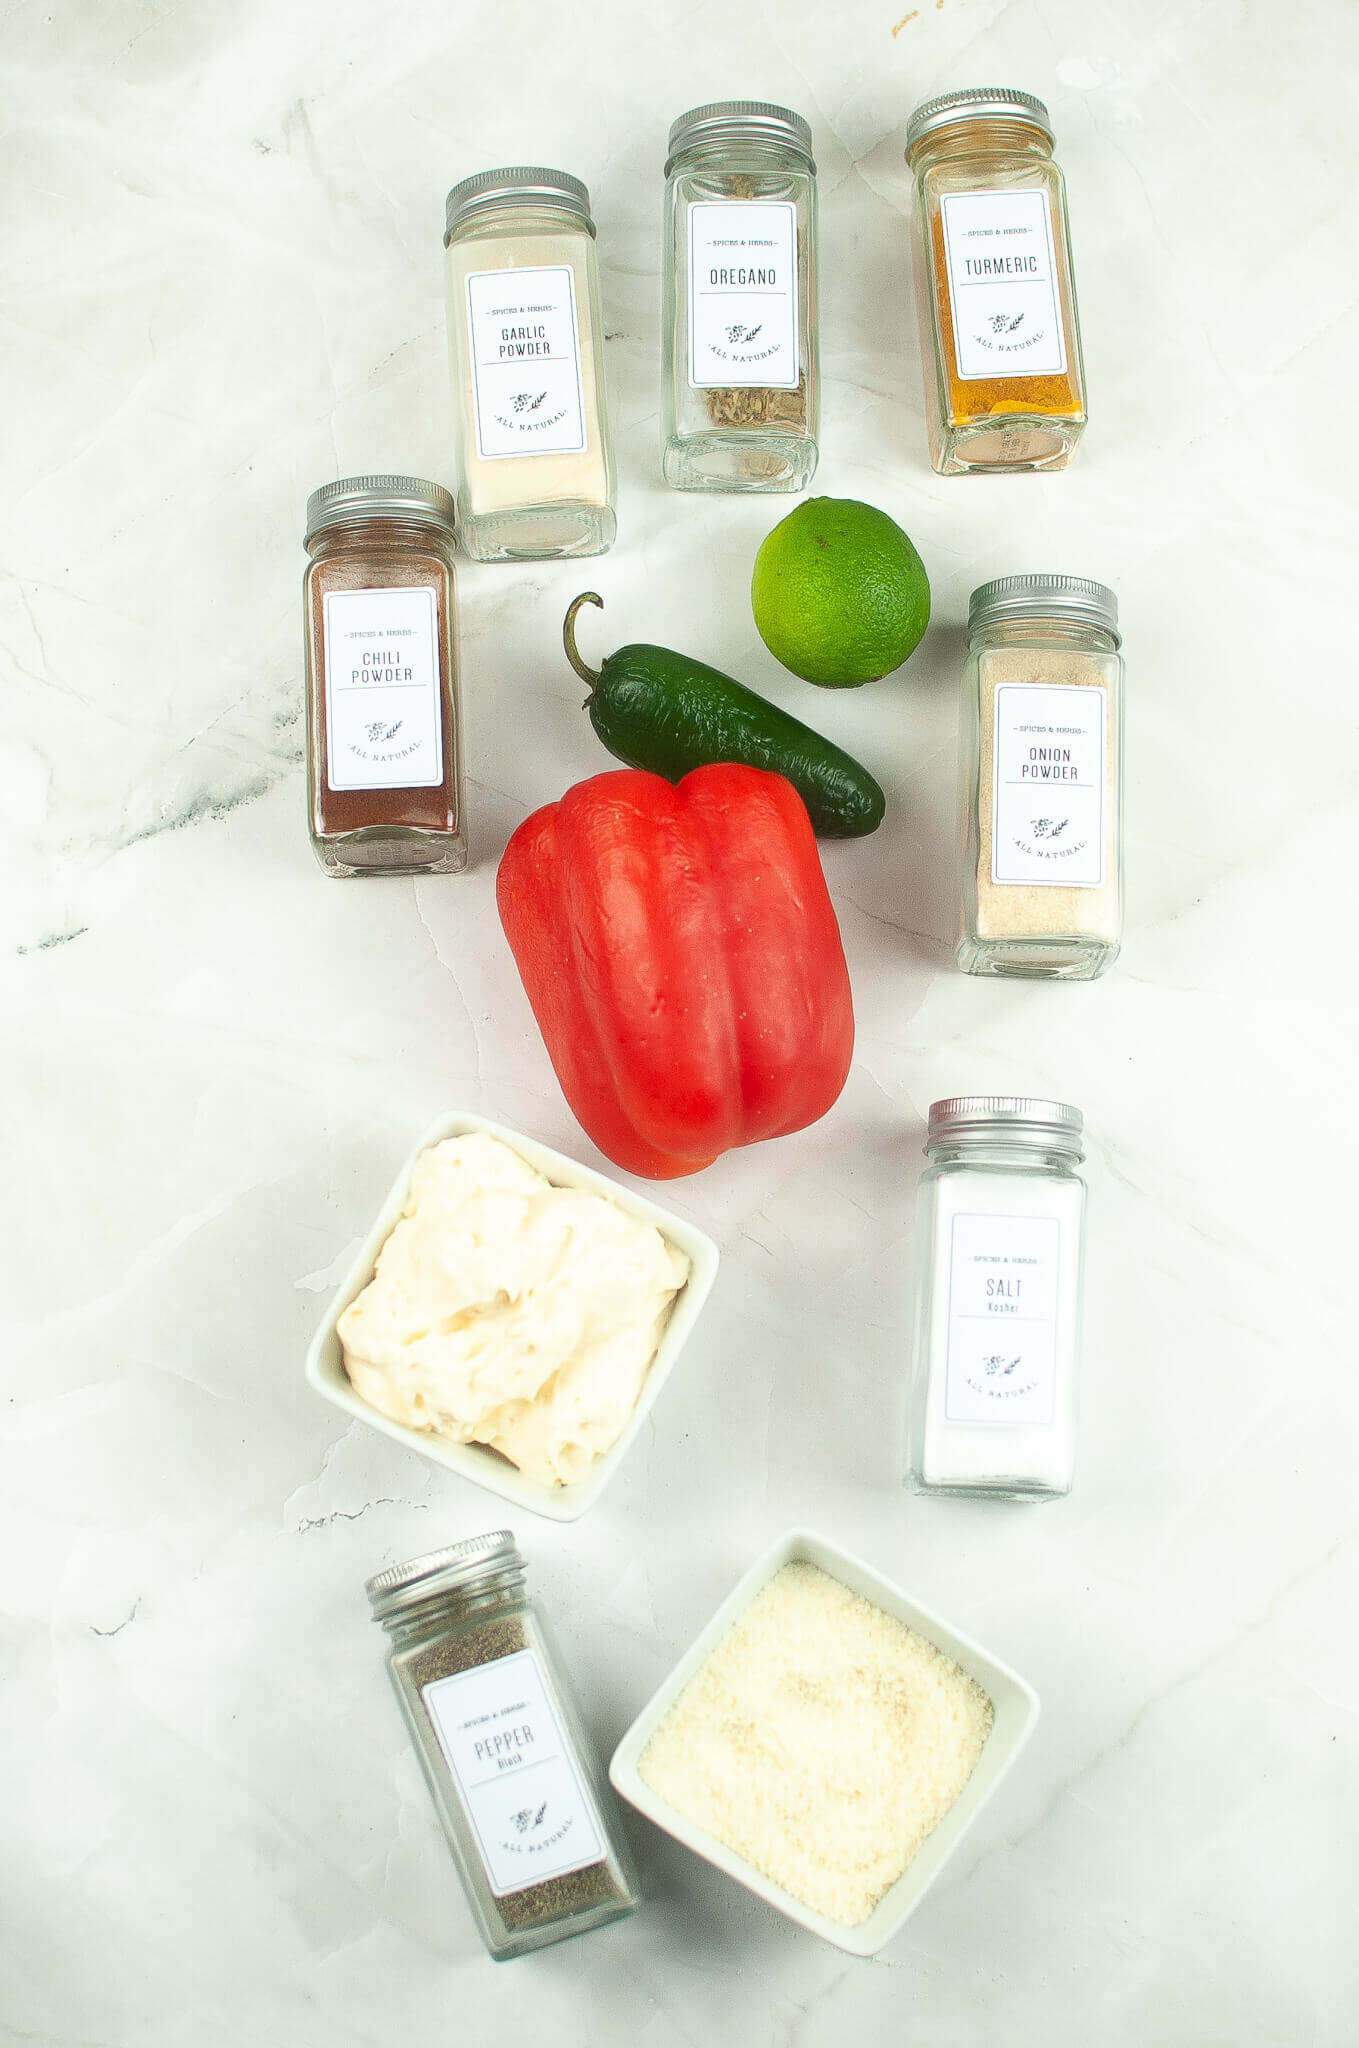 Peppers, seasonings and ingredients to create this sauce.